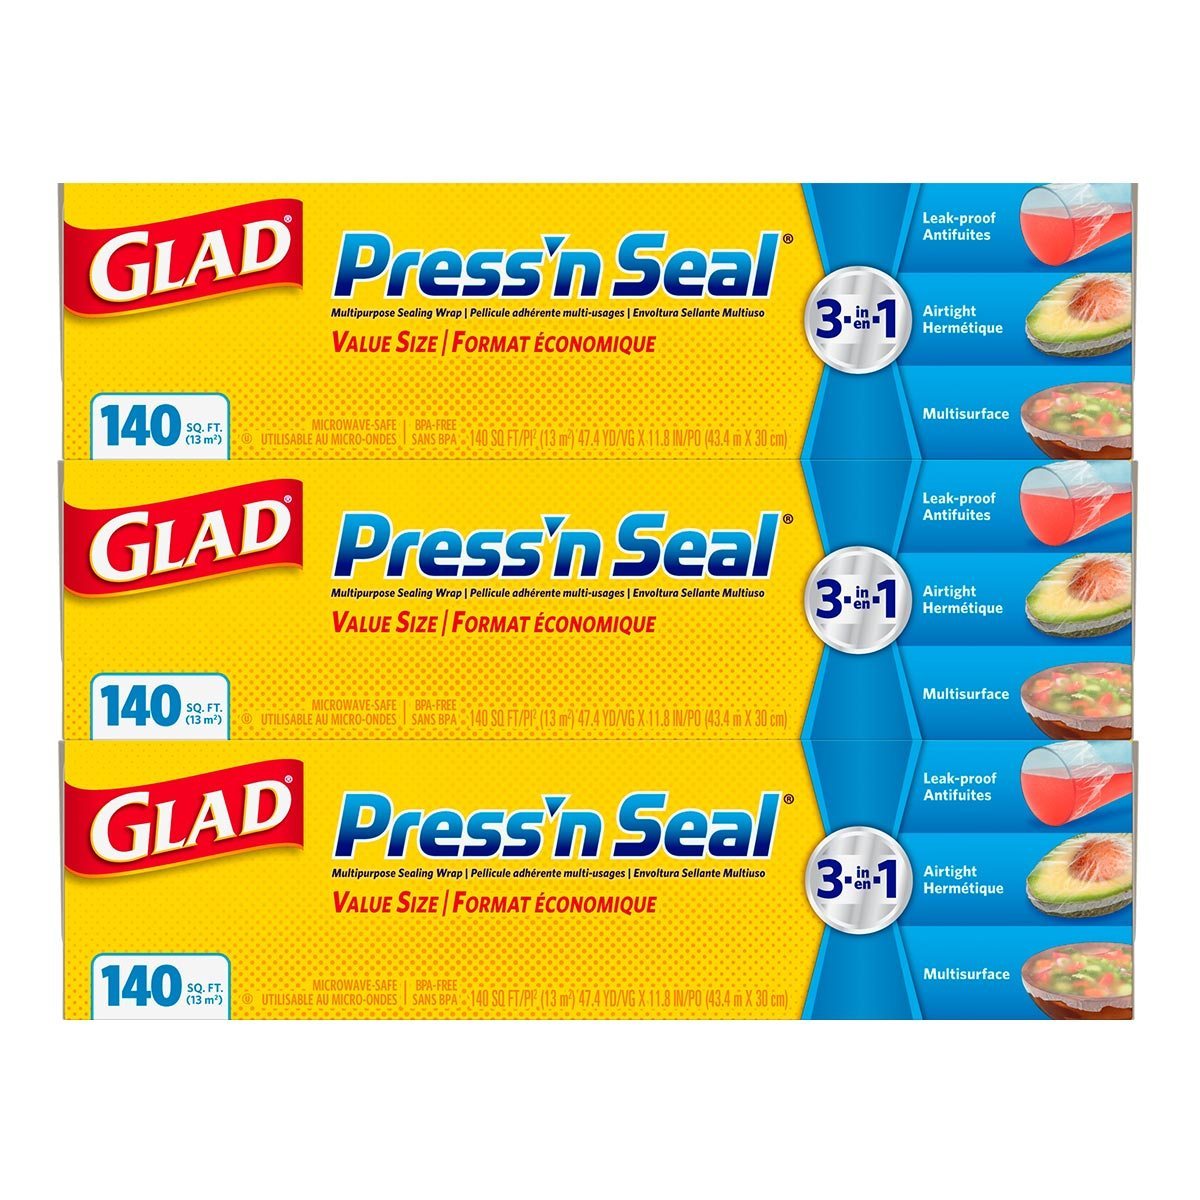 Glad Press’n Seal Plastic Food Wraps 3 Count